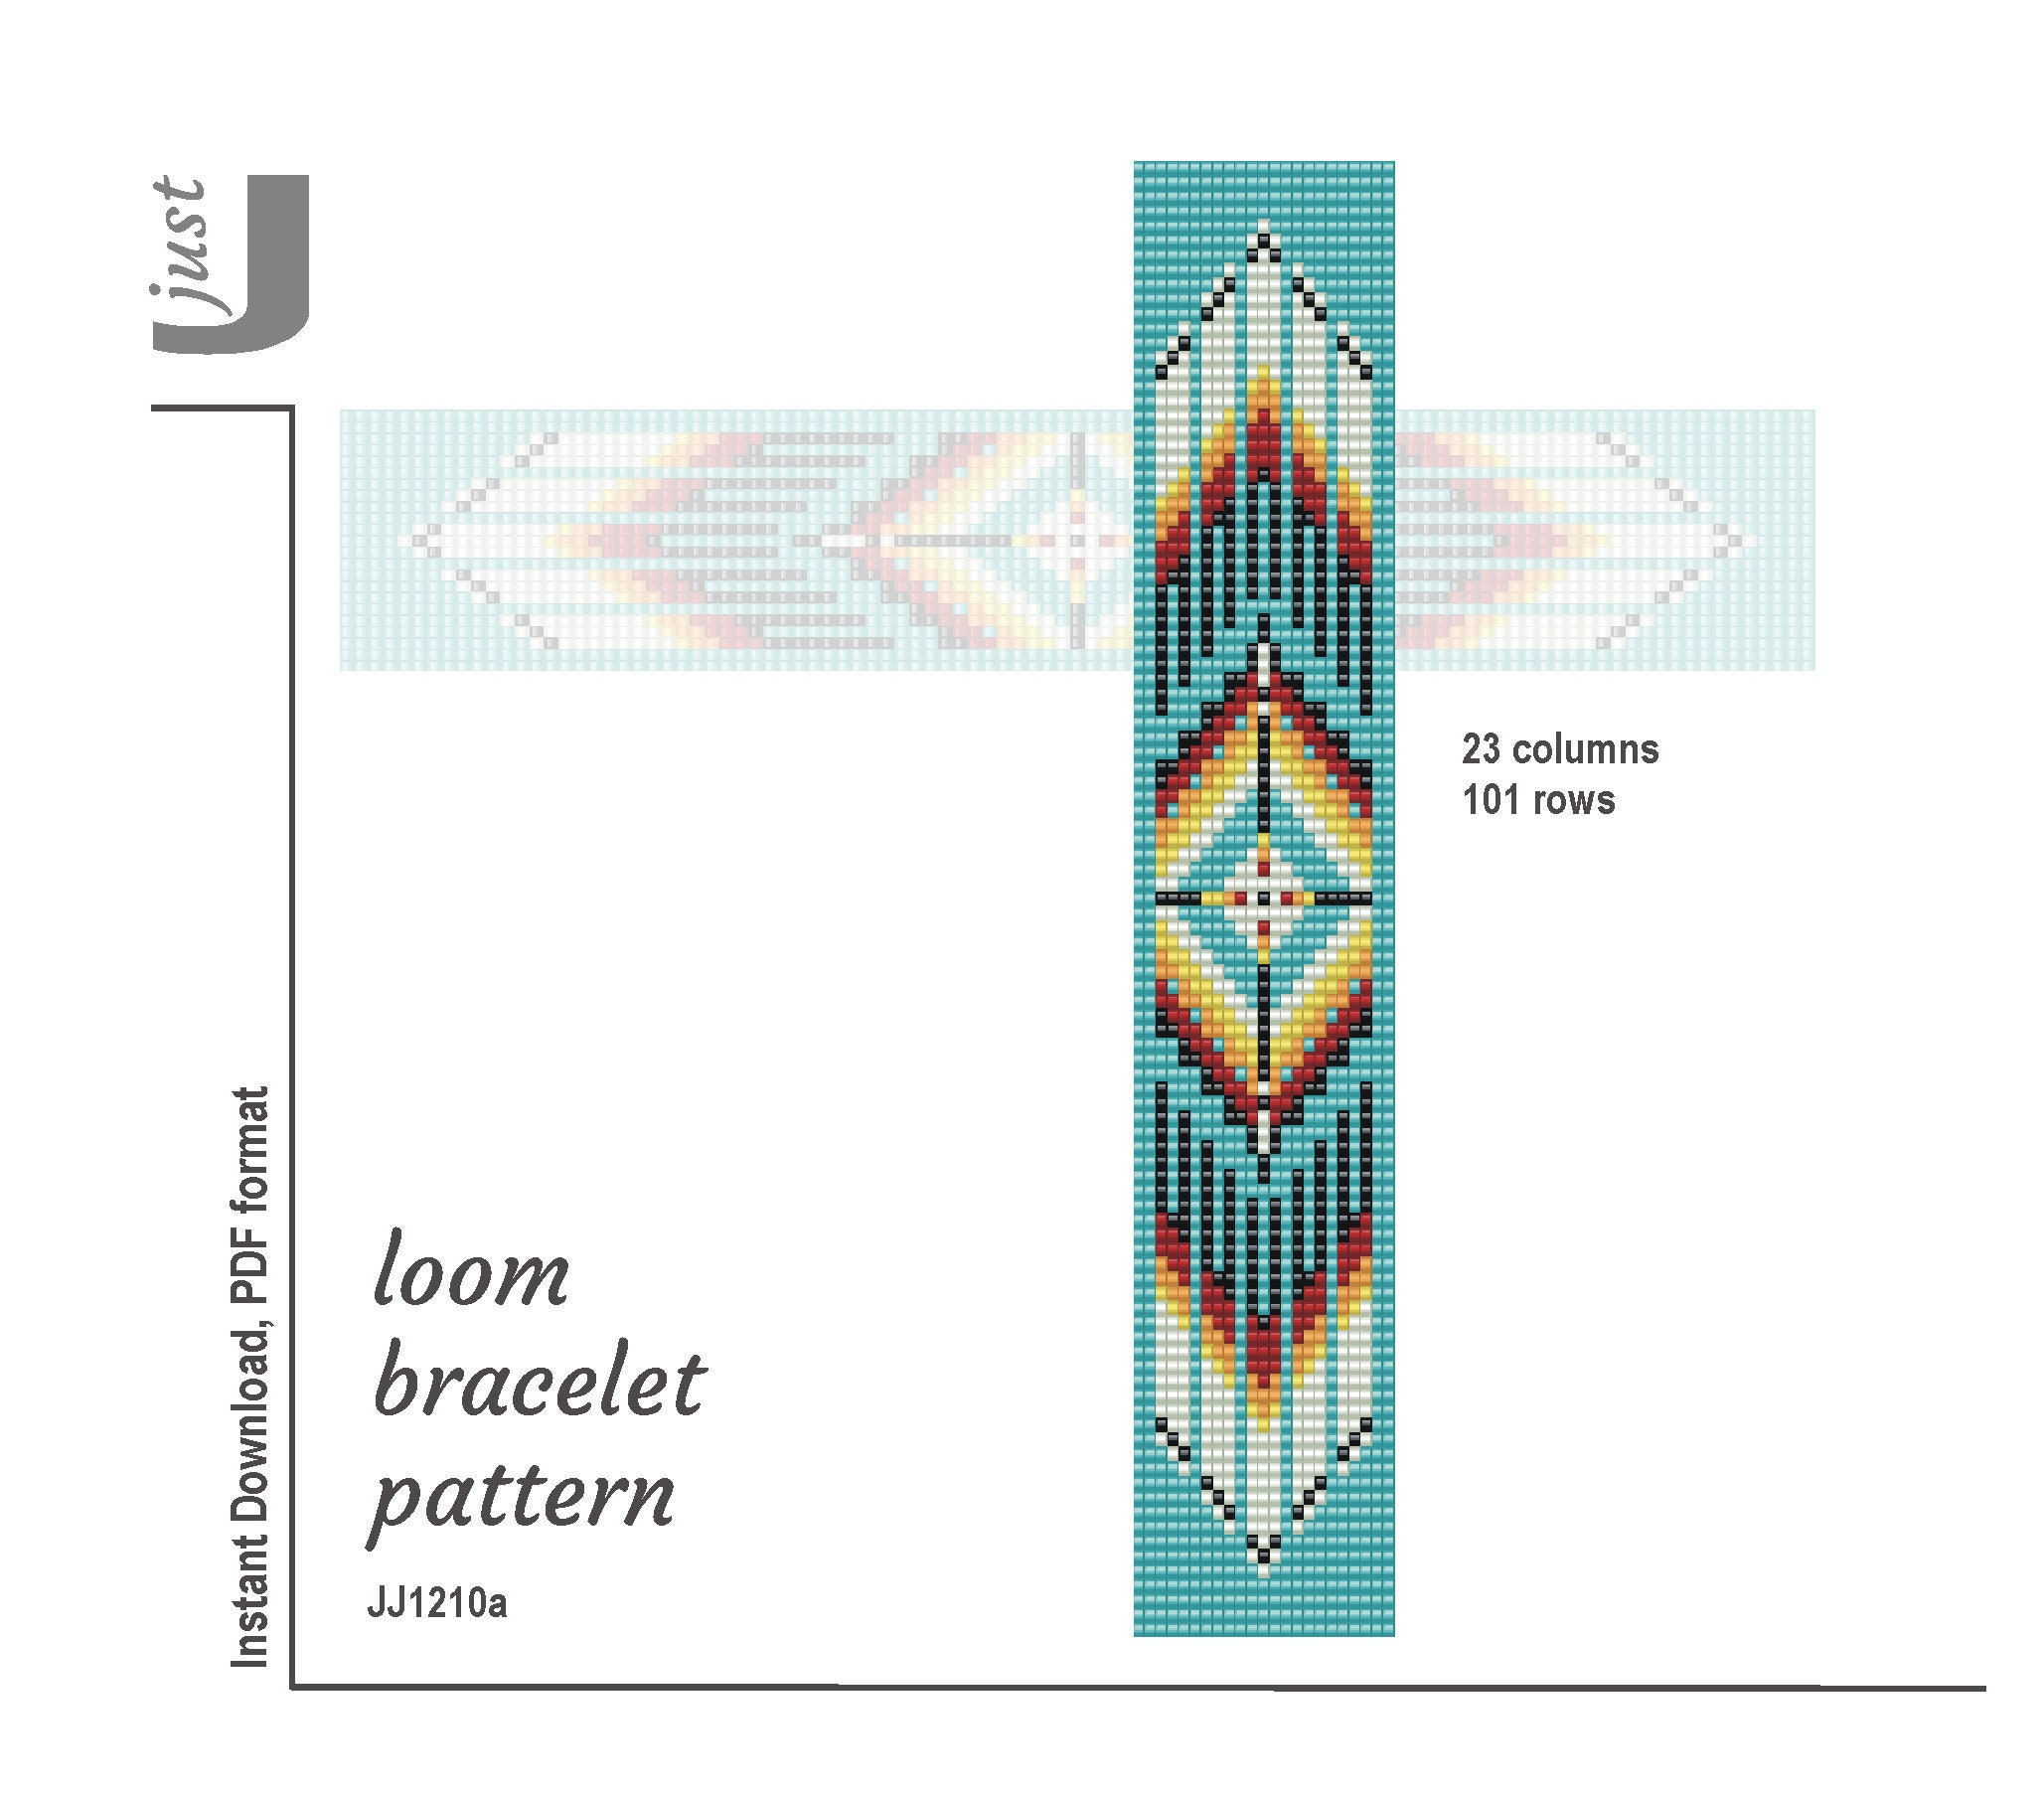 PDF Bead Loom Bracelet Pattern Drops / Beading grid - Petit Bout